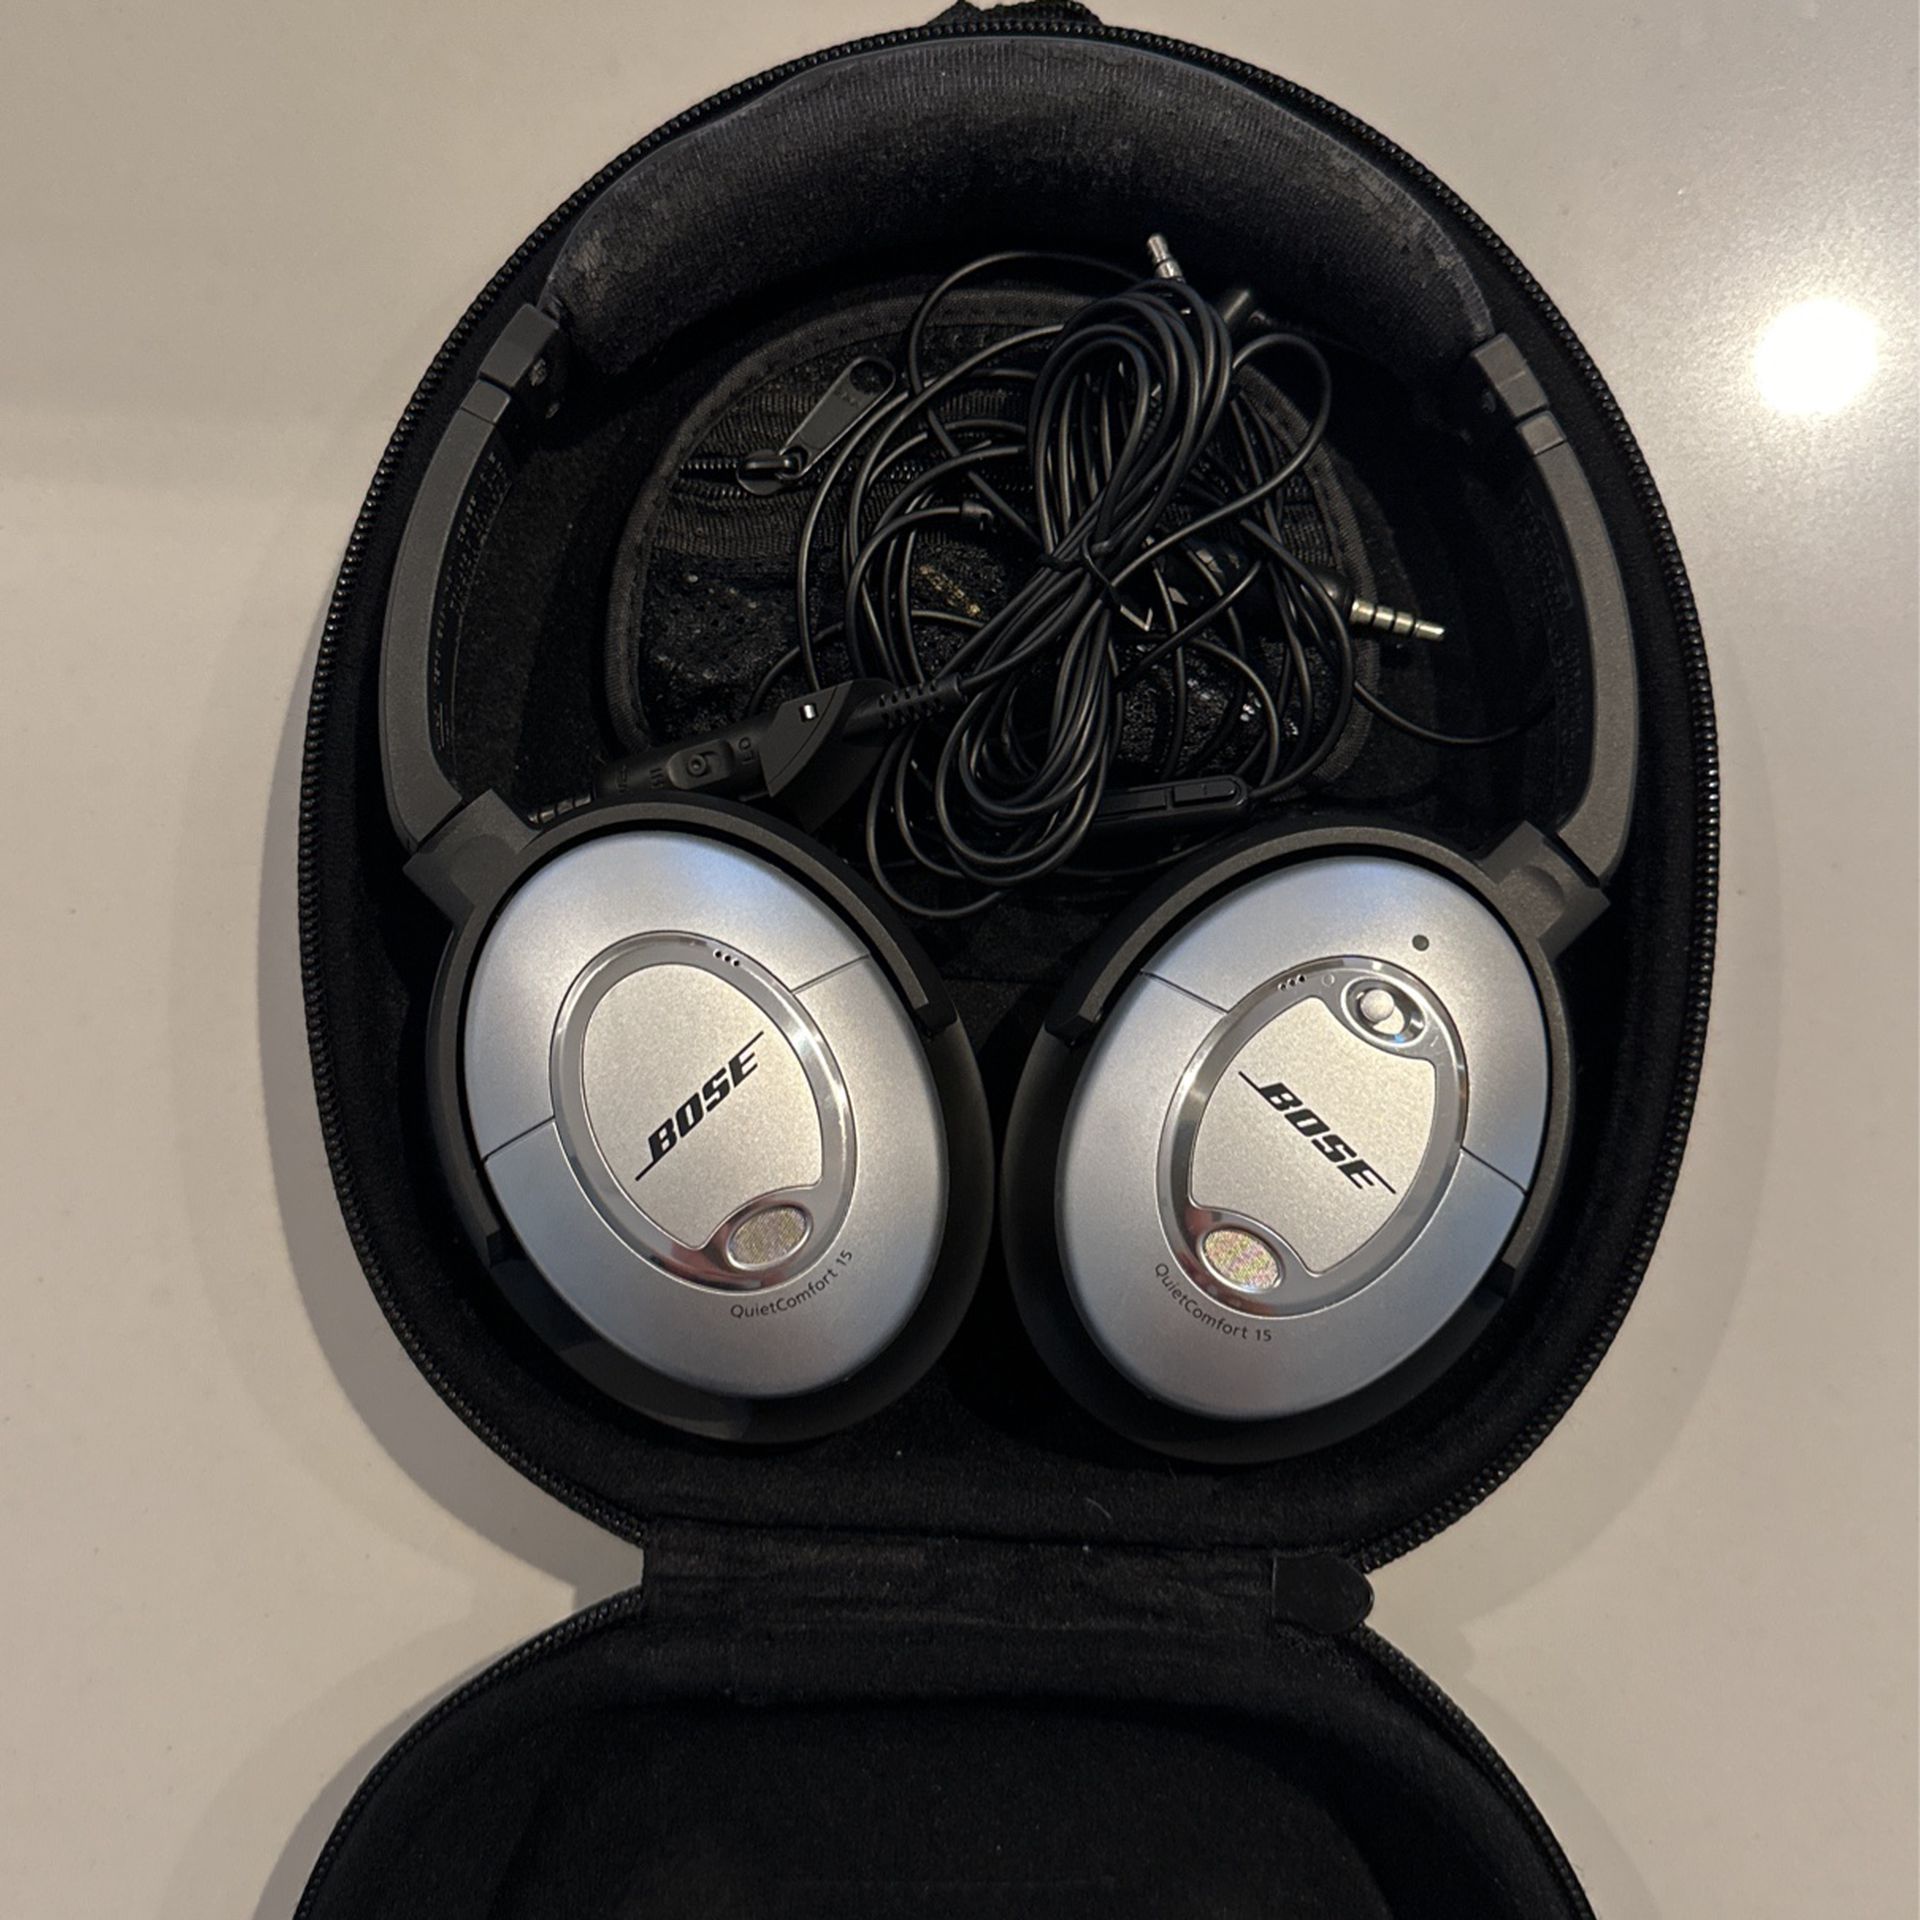 Bose Quiet Comfort 15 Over Ear Noise Canceling Headphones